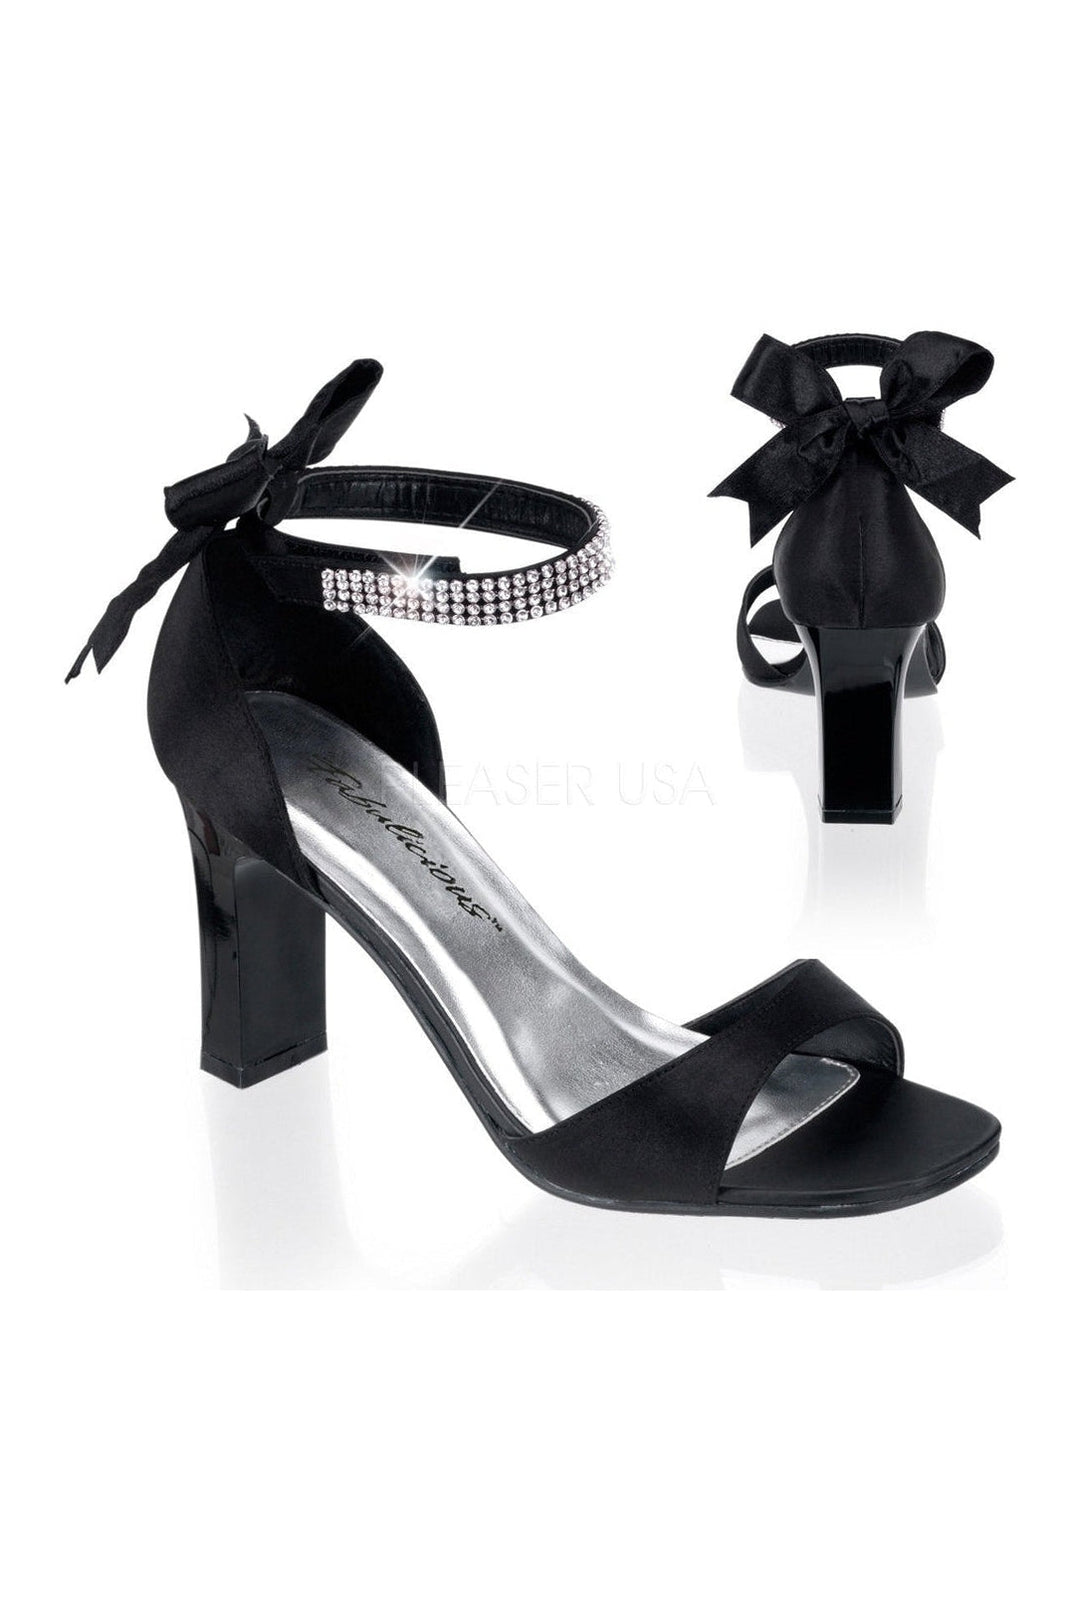 ROMANCE-372 Sandal | Black Genuine Satin-Fabulicious-Black-Sandals-SEXYSHOES.COM